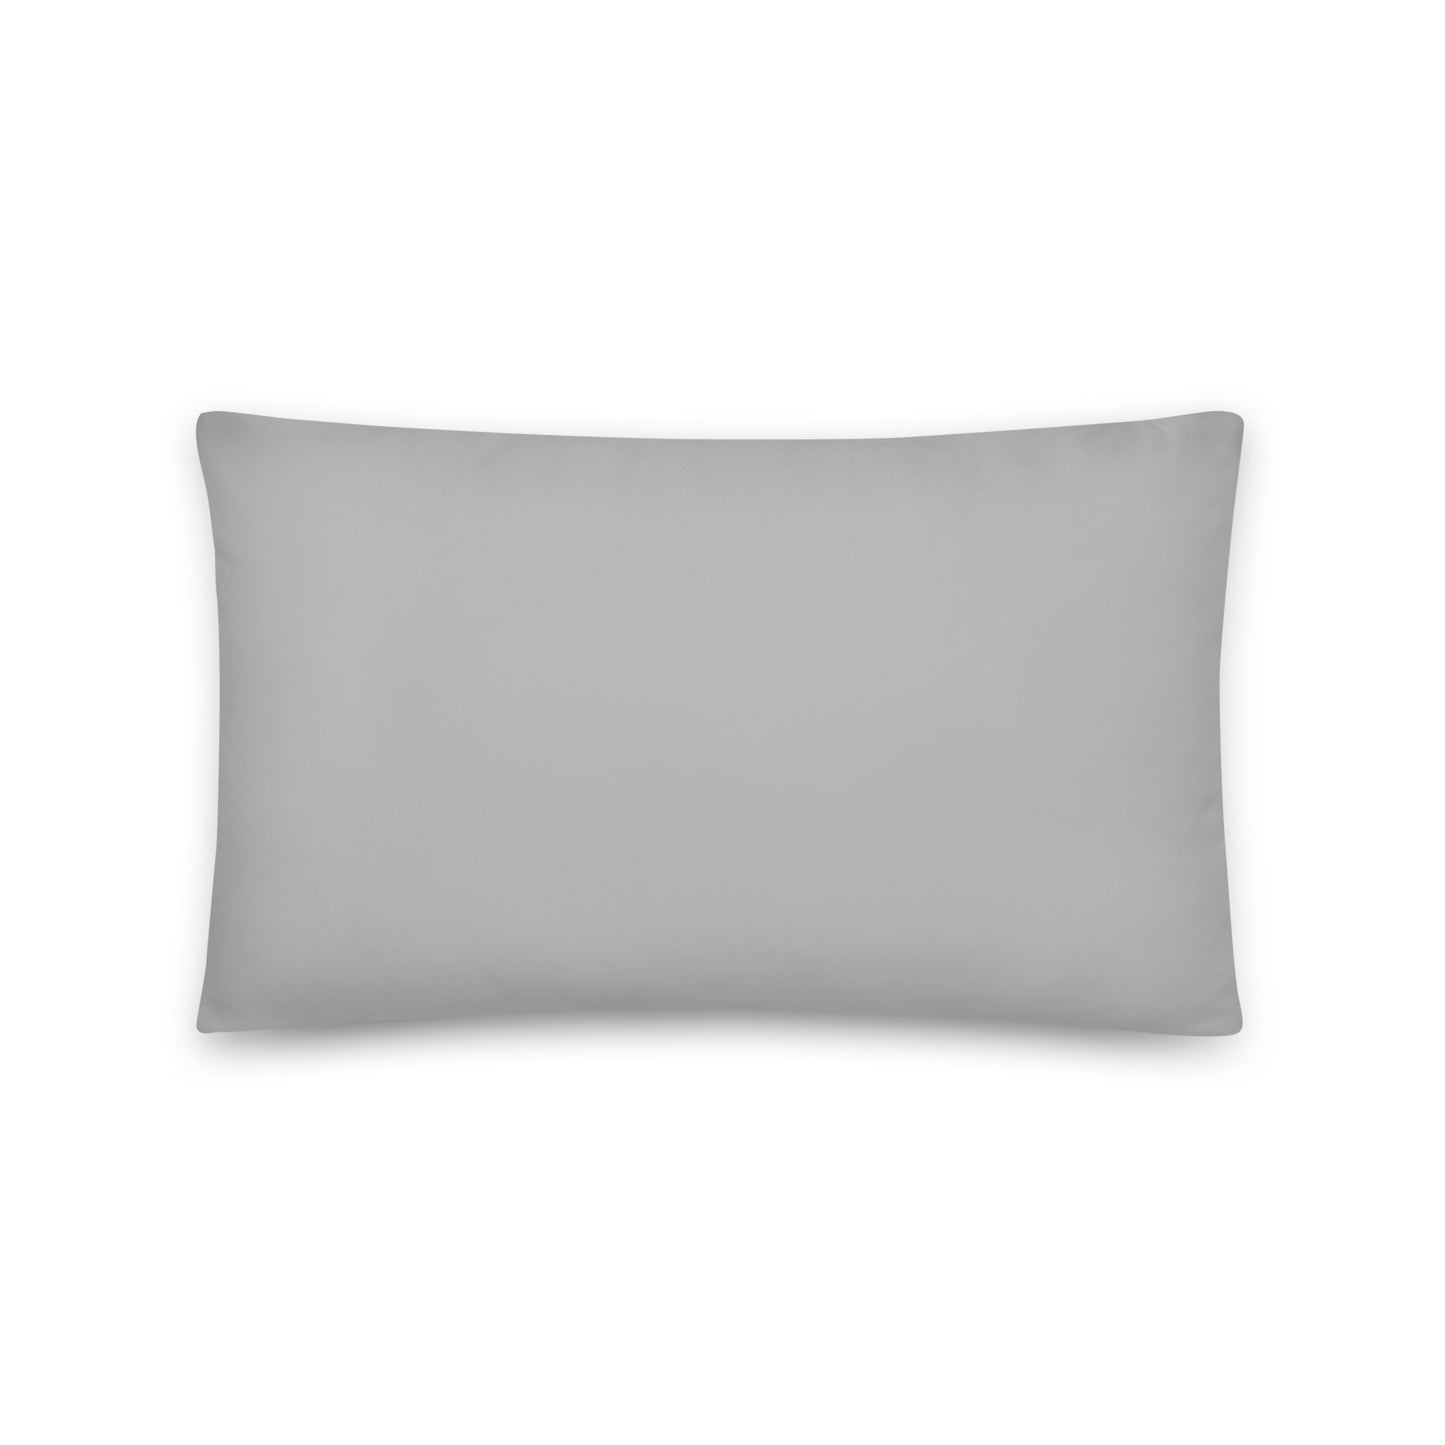 Basic Grey - Sustainably Made Pillows